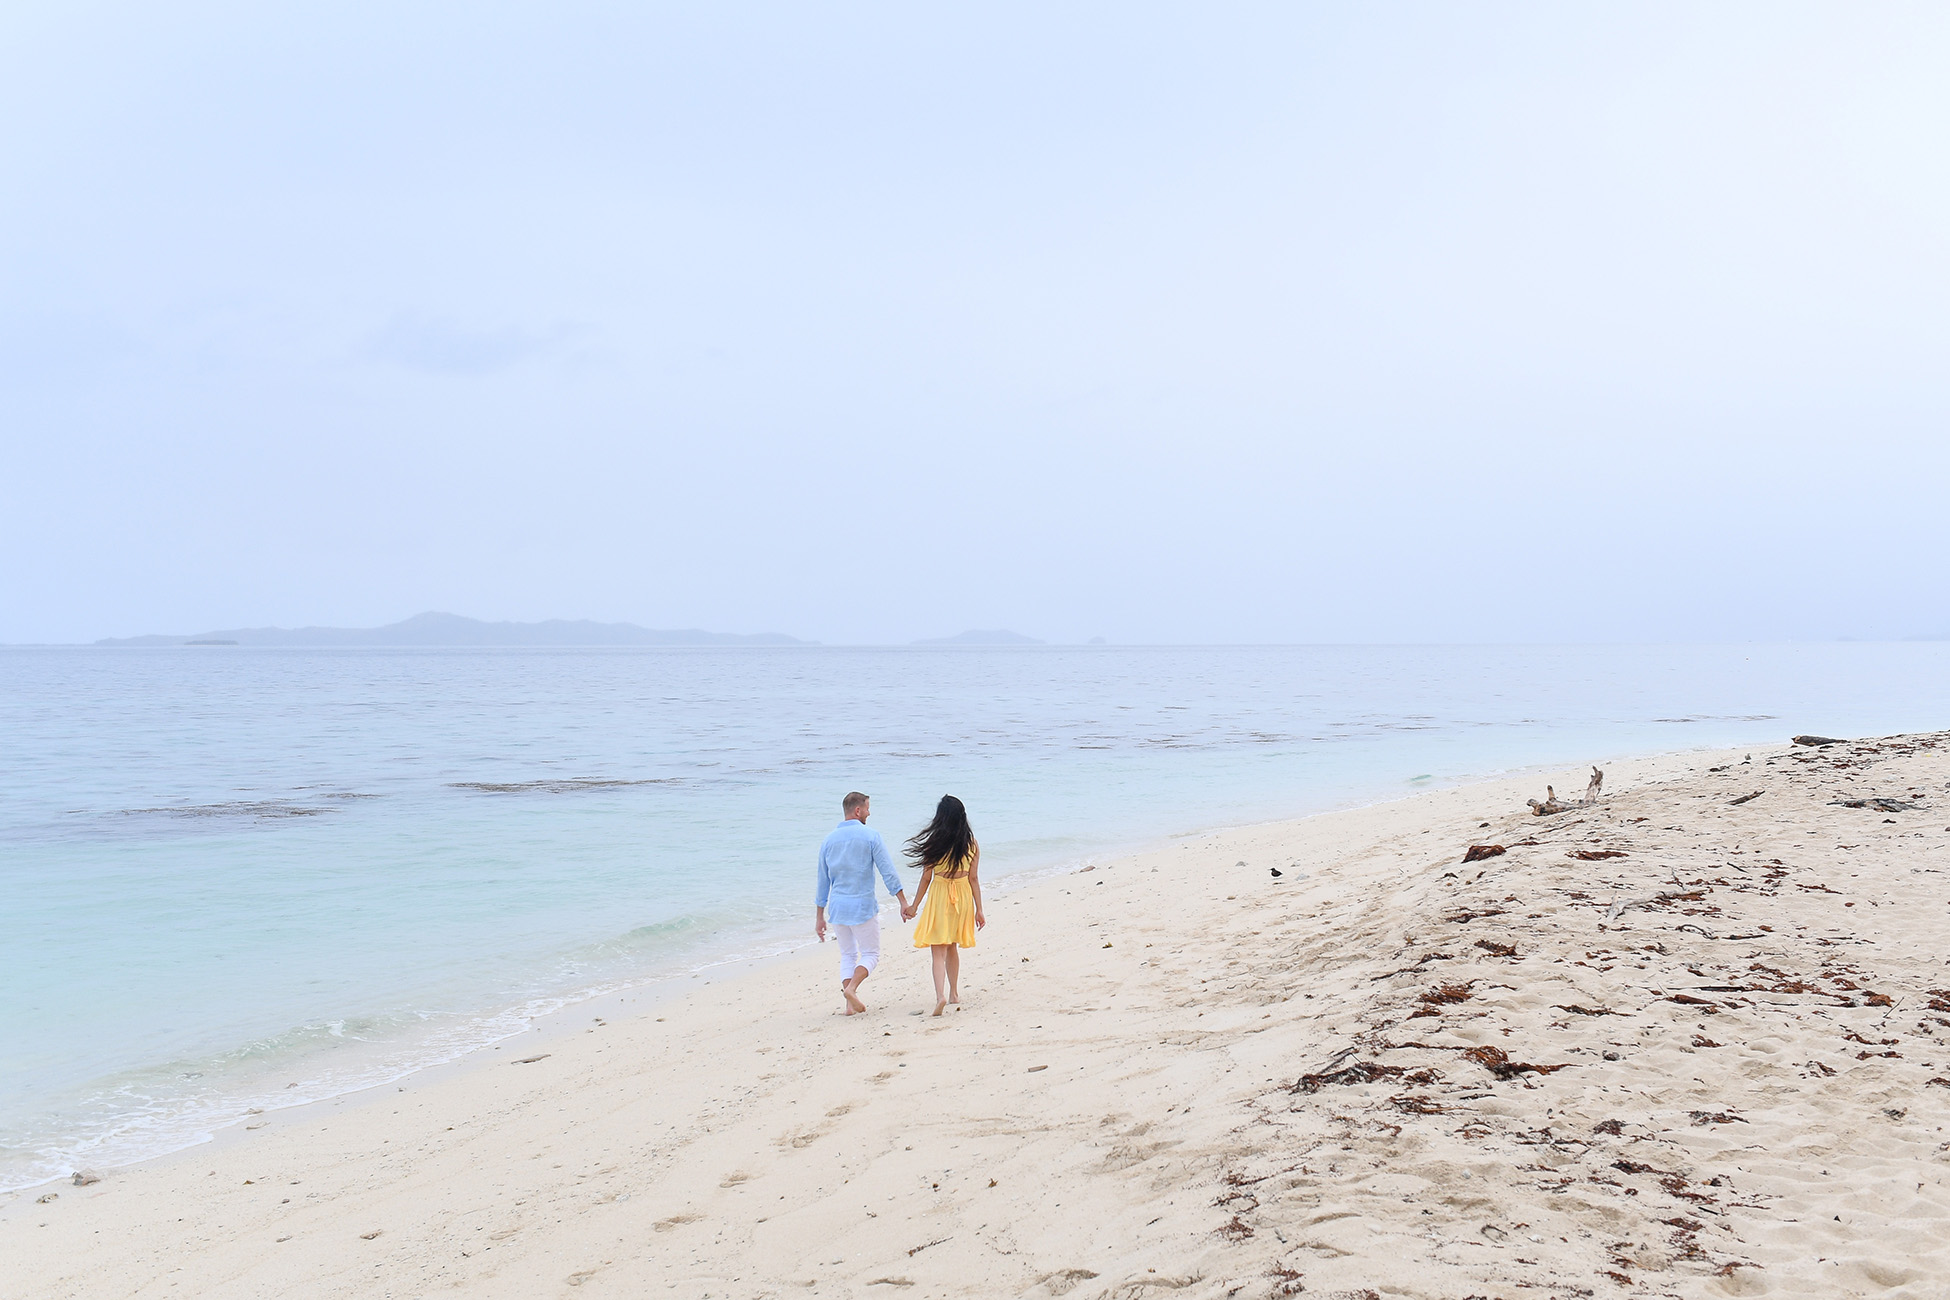 The couple strolls hand in hand on the beige Manunca Fiji beach